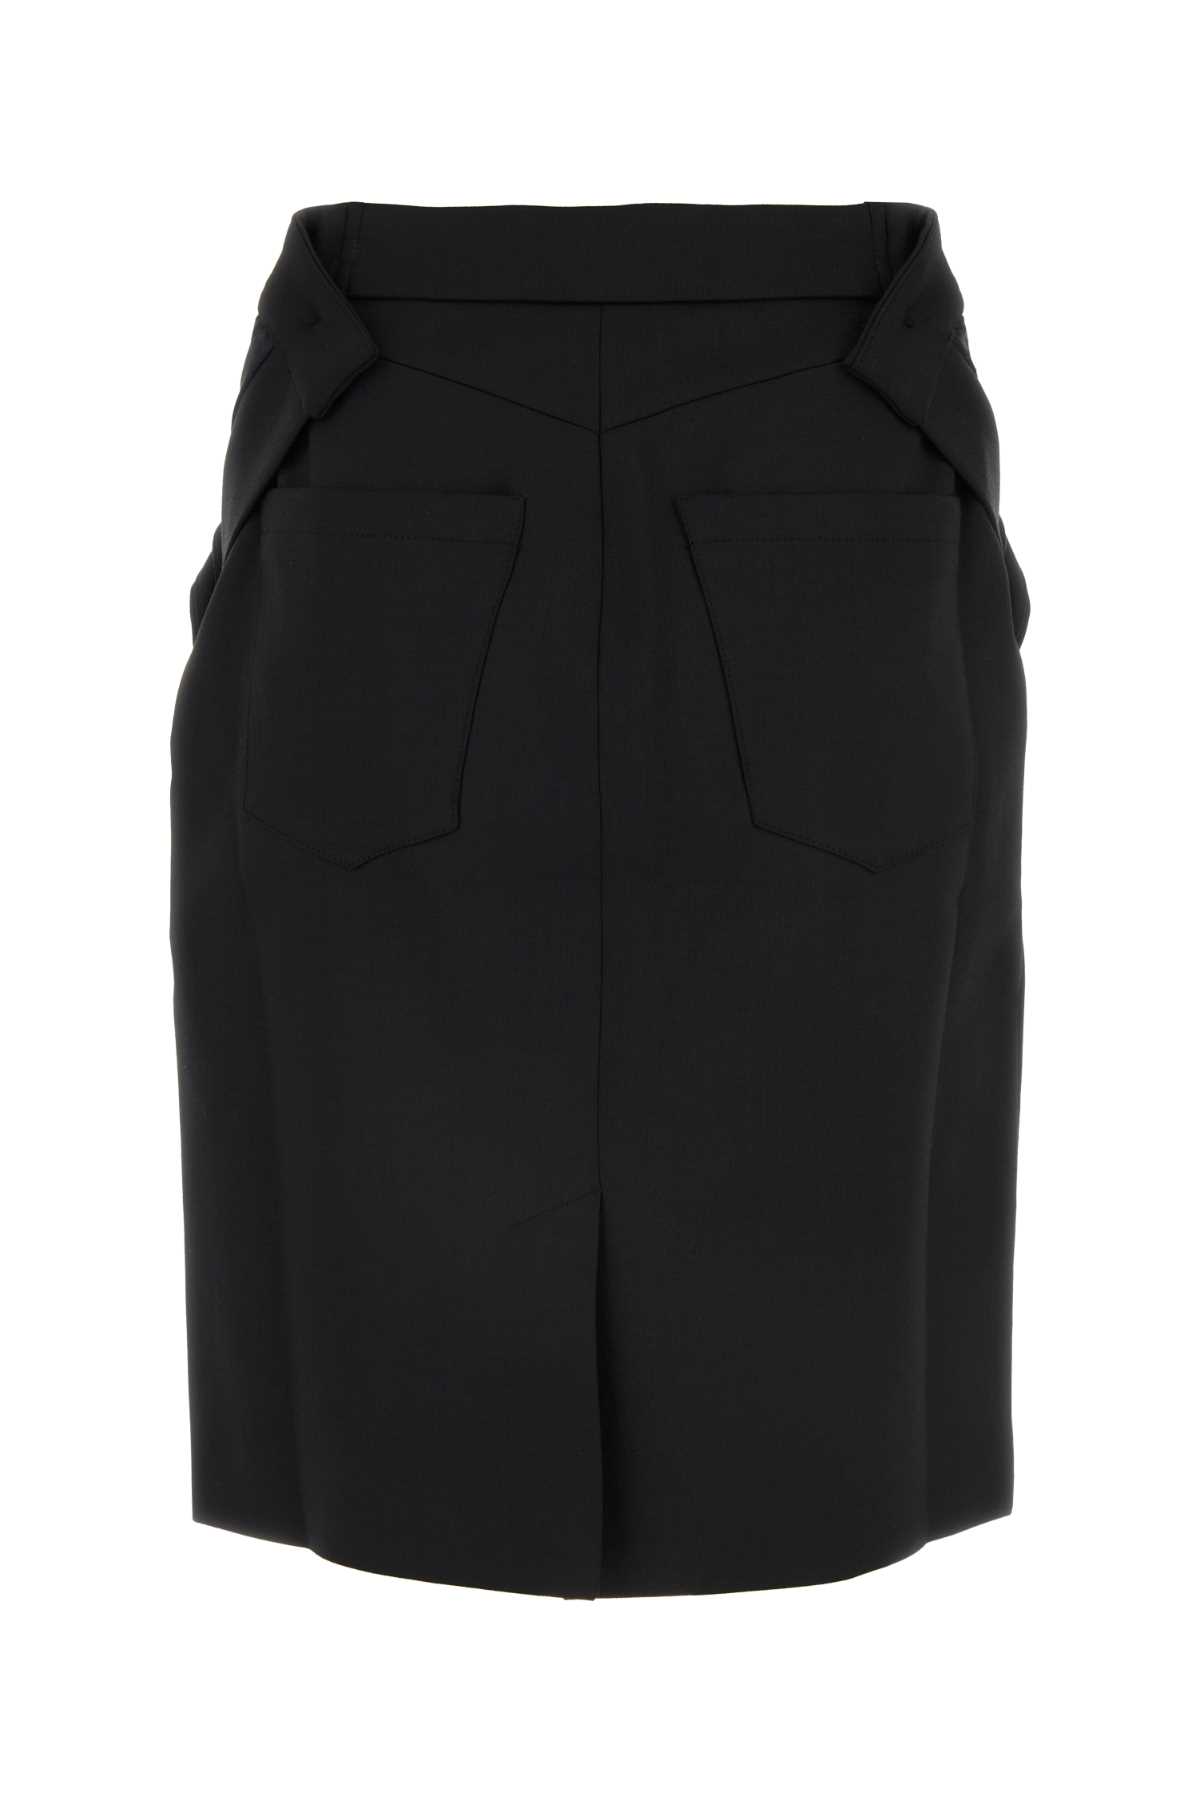 Coperni Black Stretch Polyester Blend Skirt